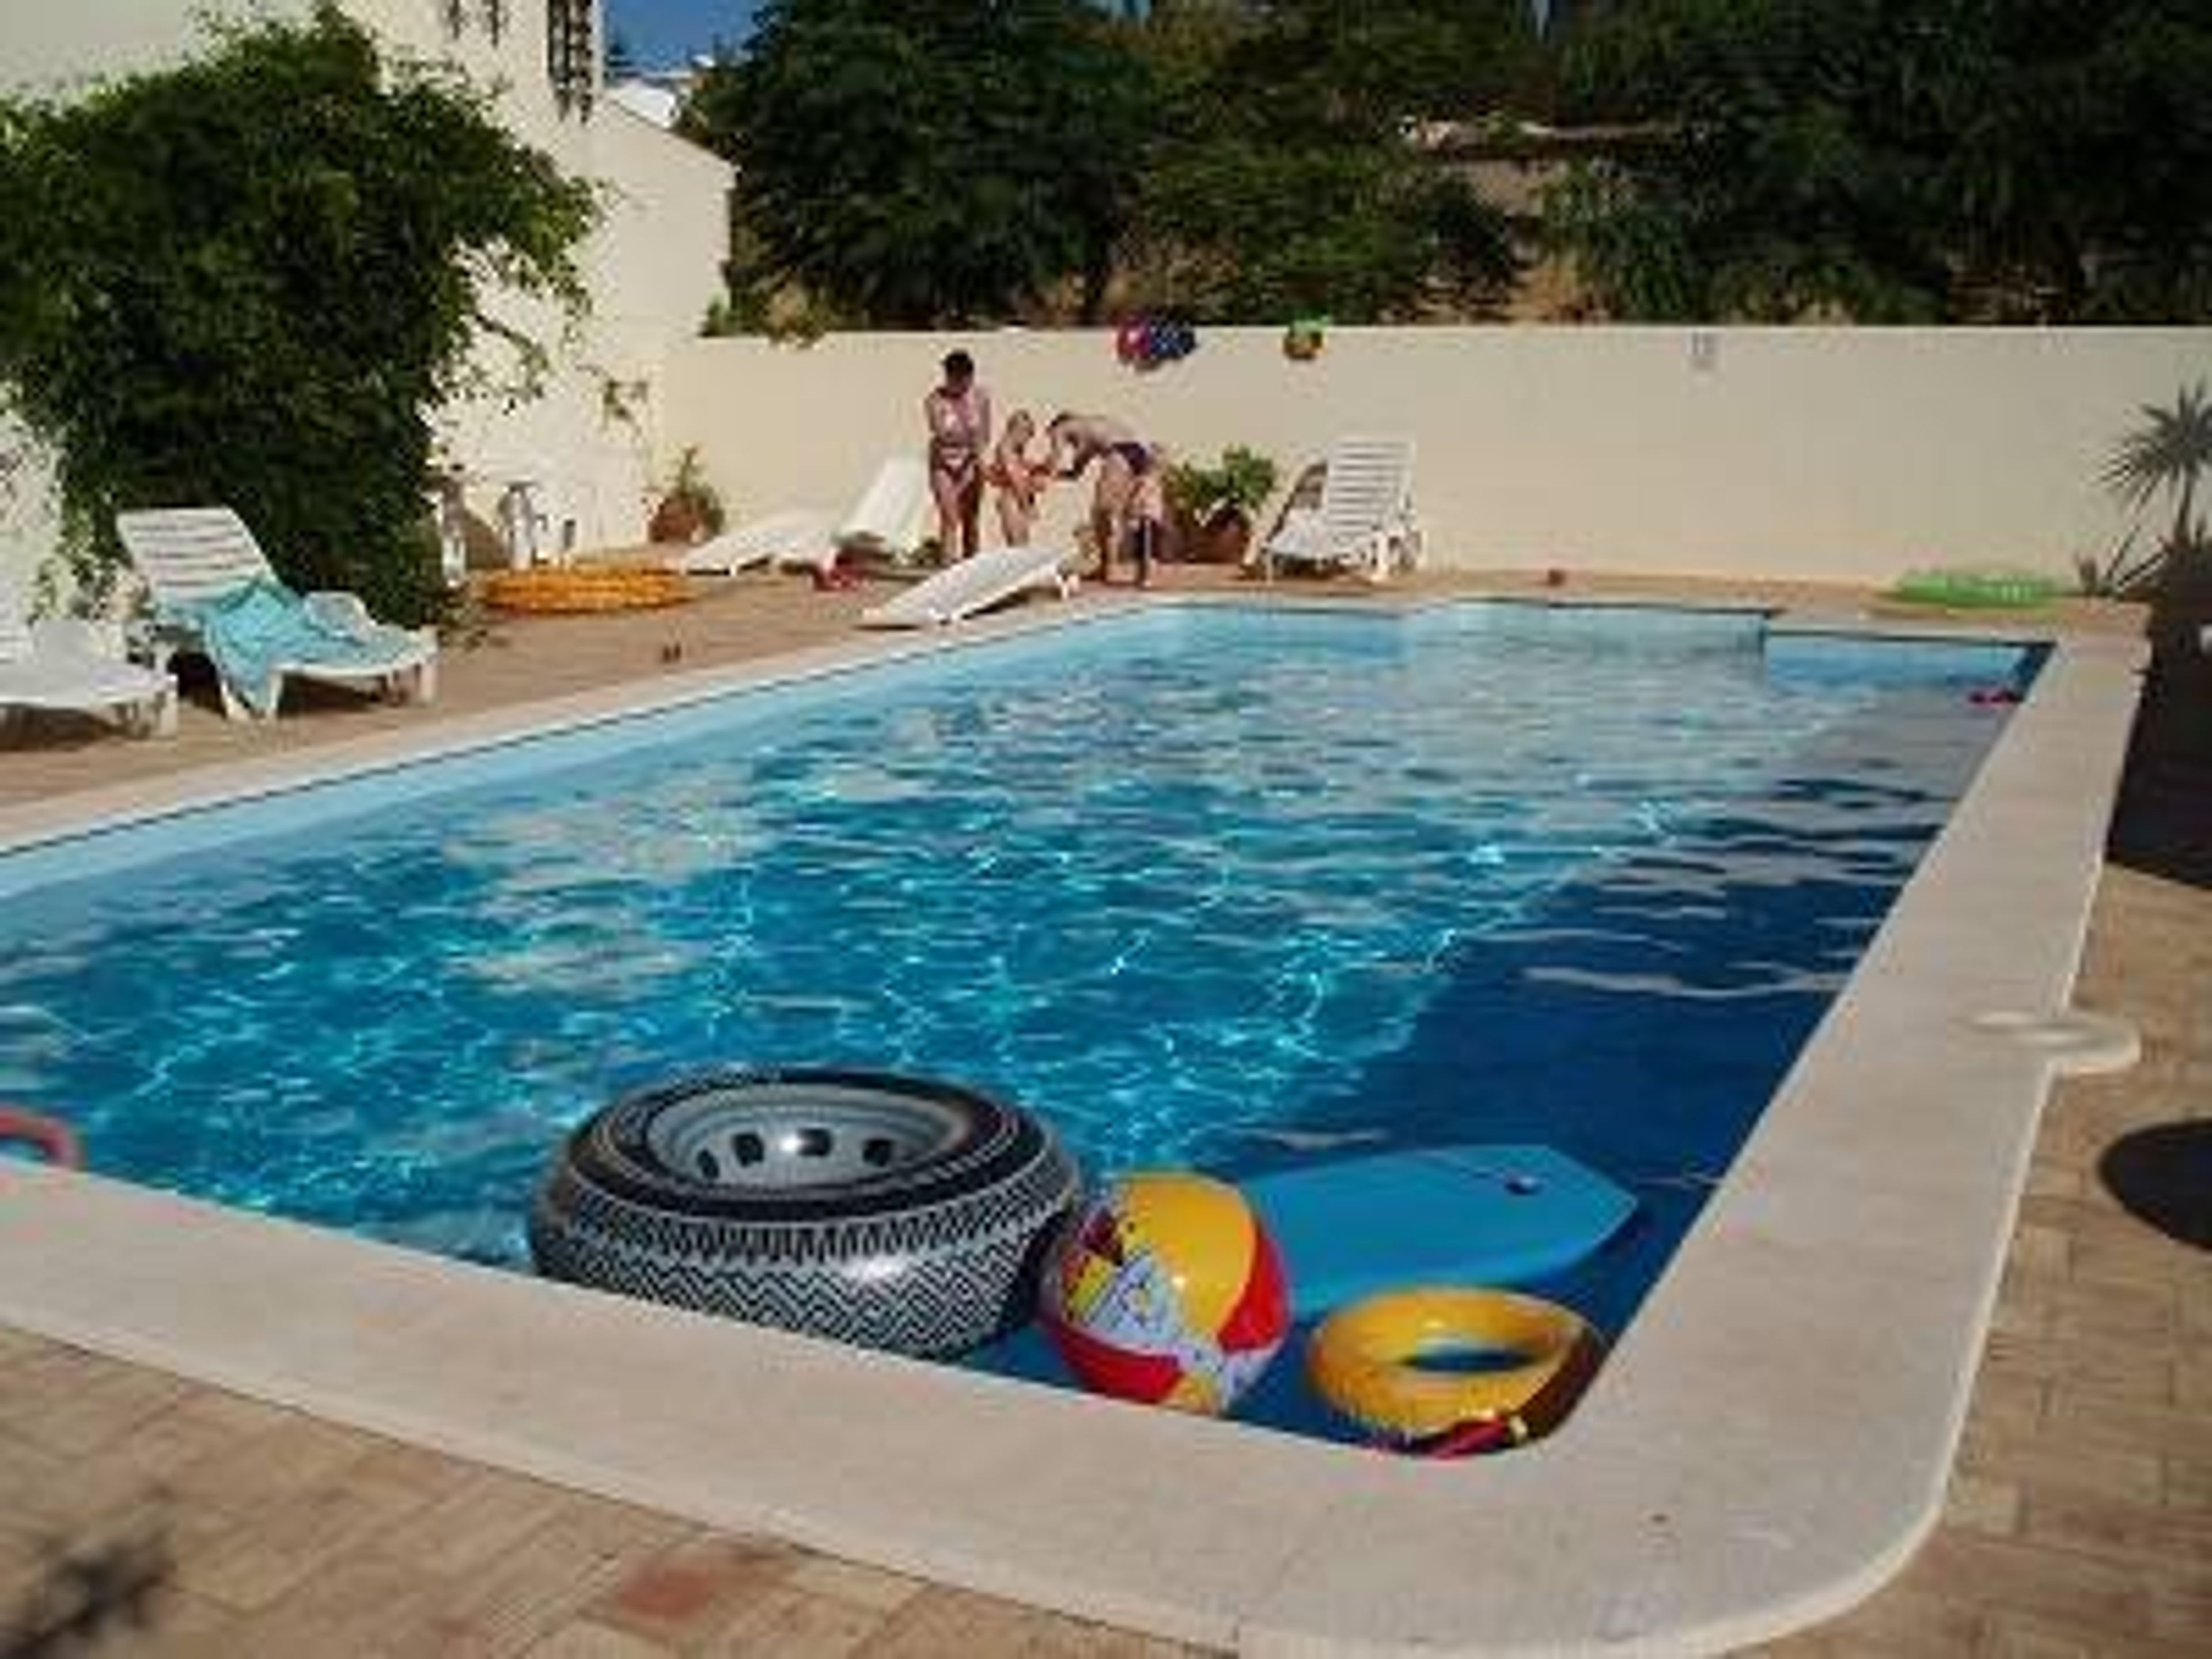 The Pool measures 10 x 5 metres